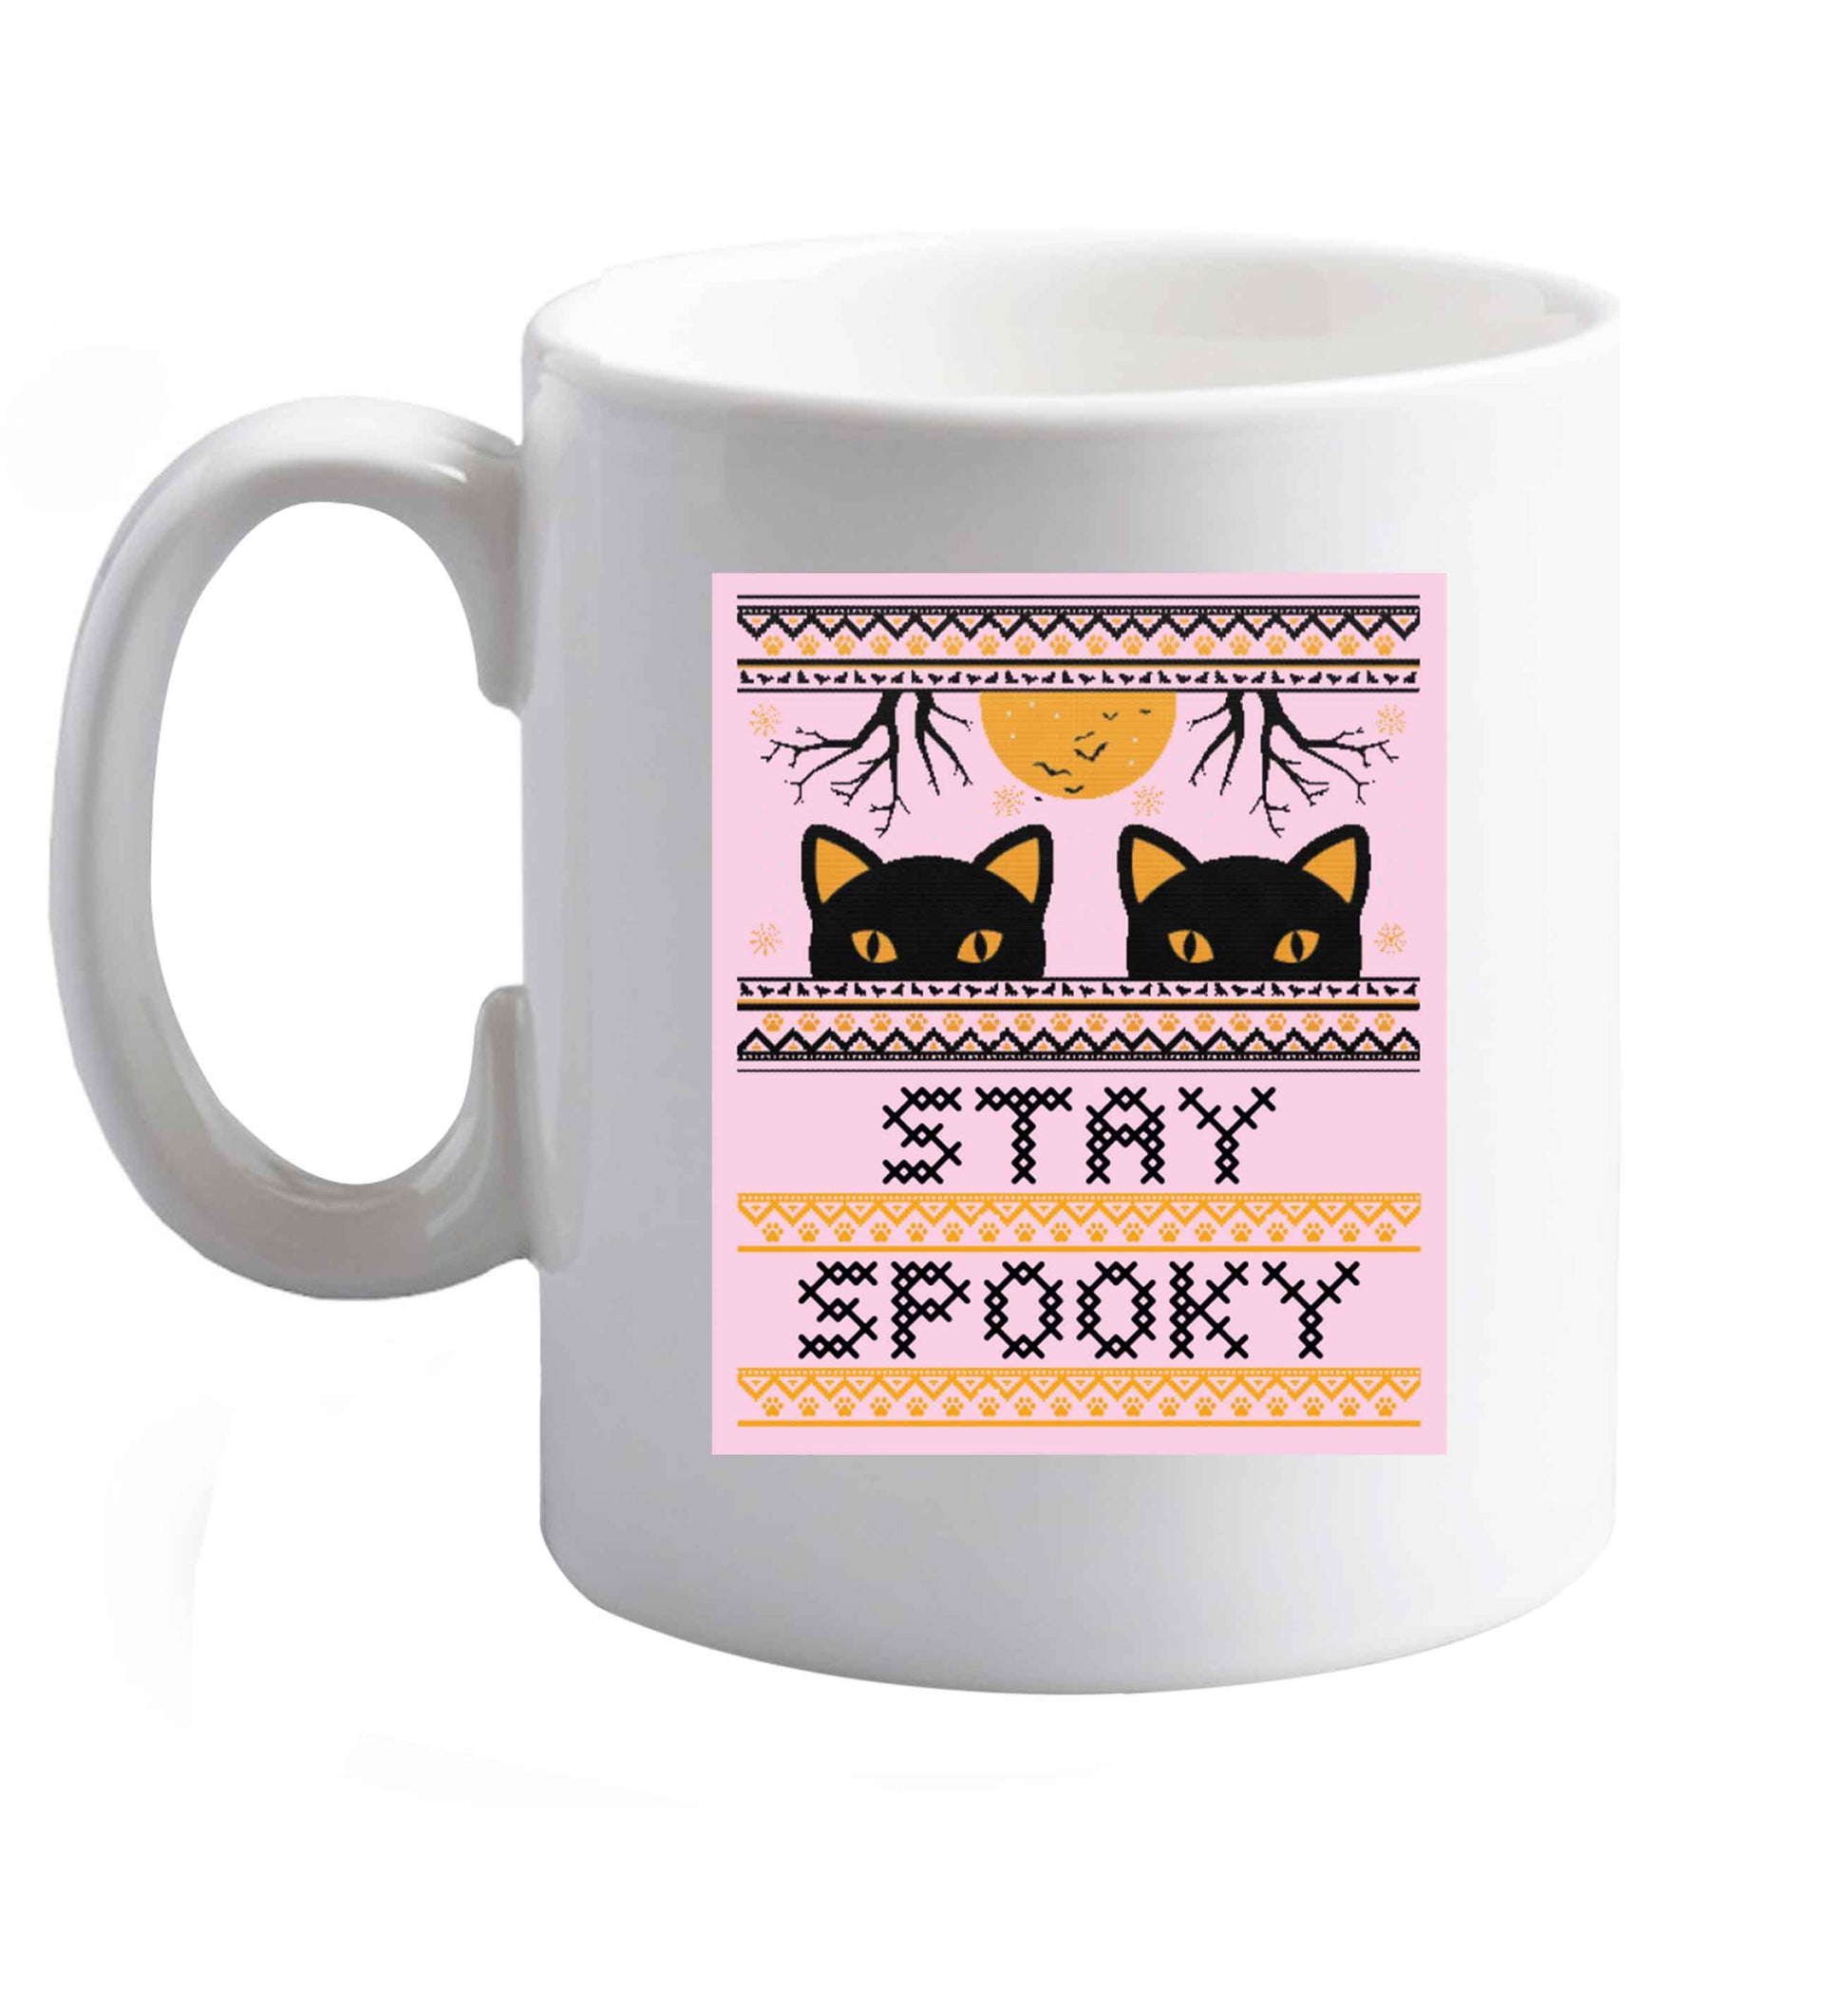 10 oz Stay spooky ceramic mug right handed